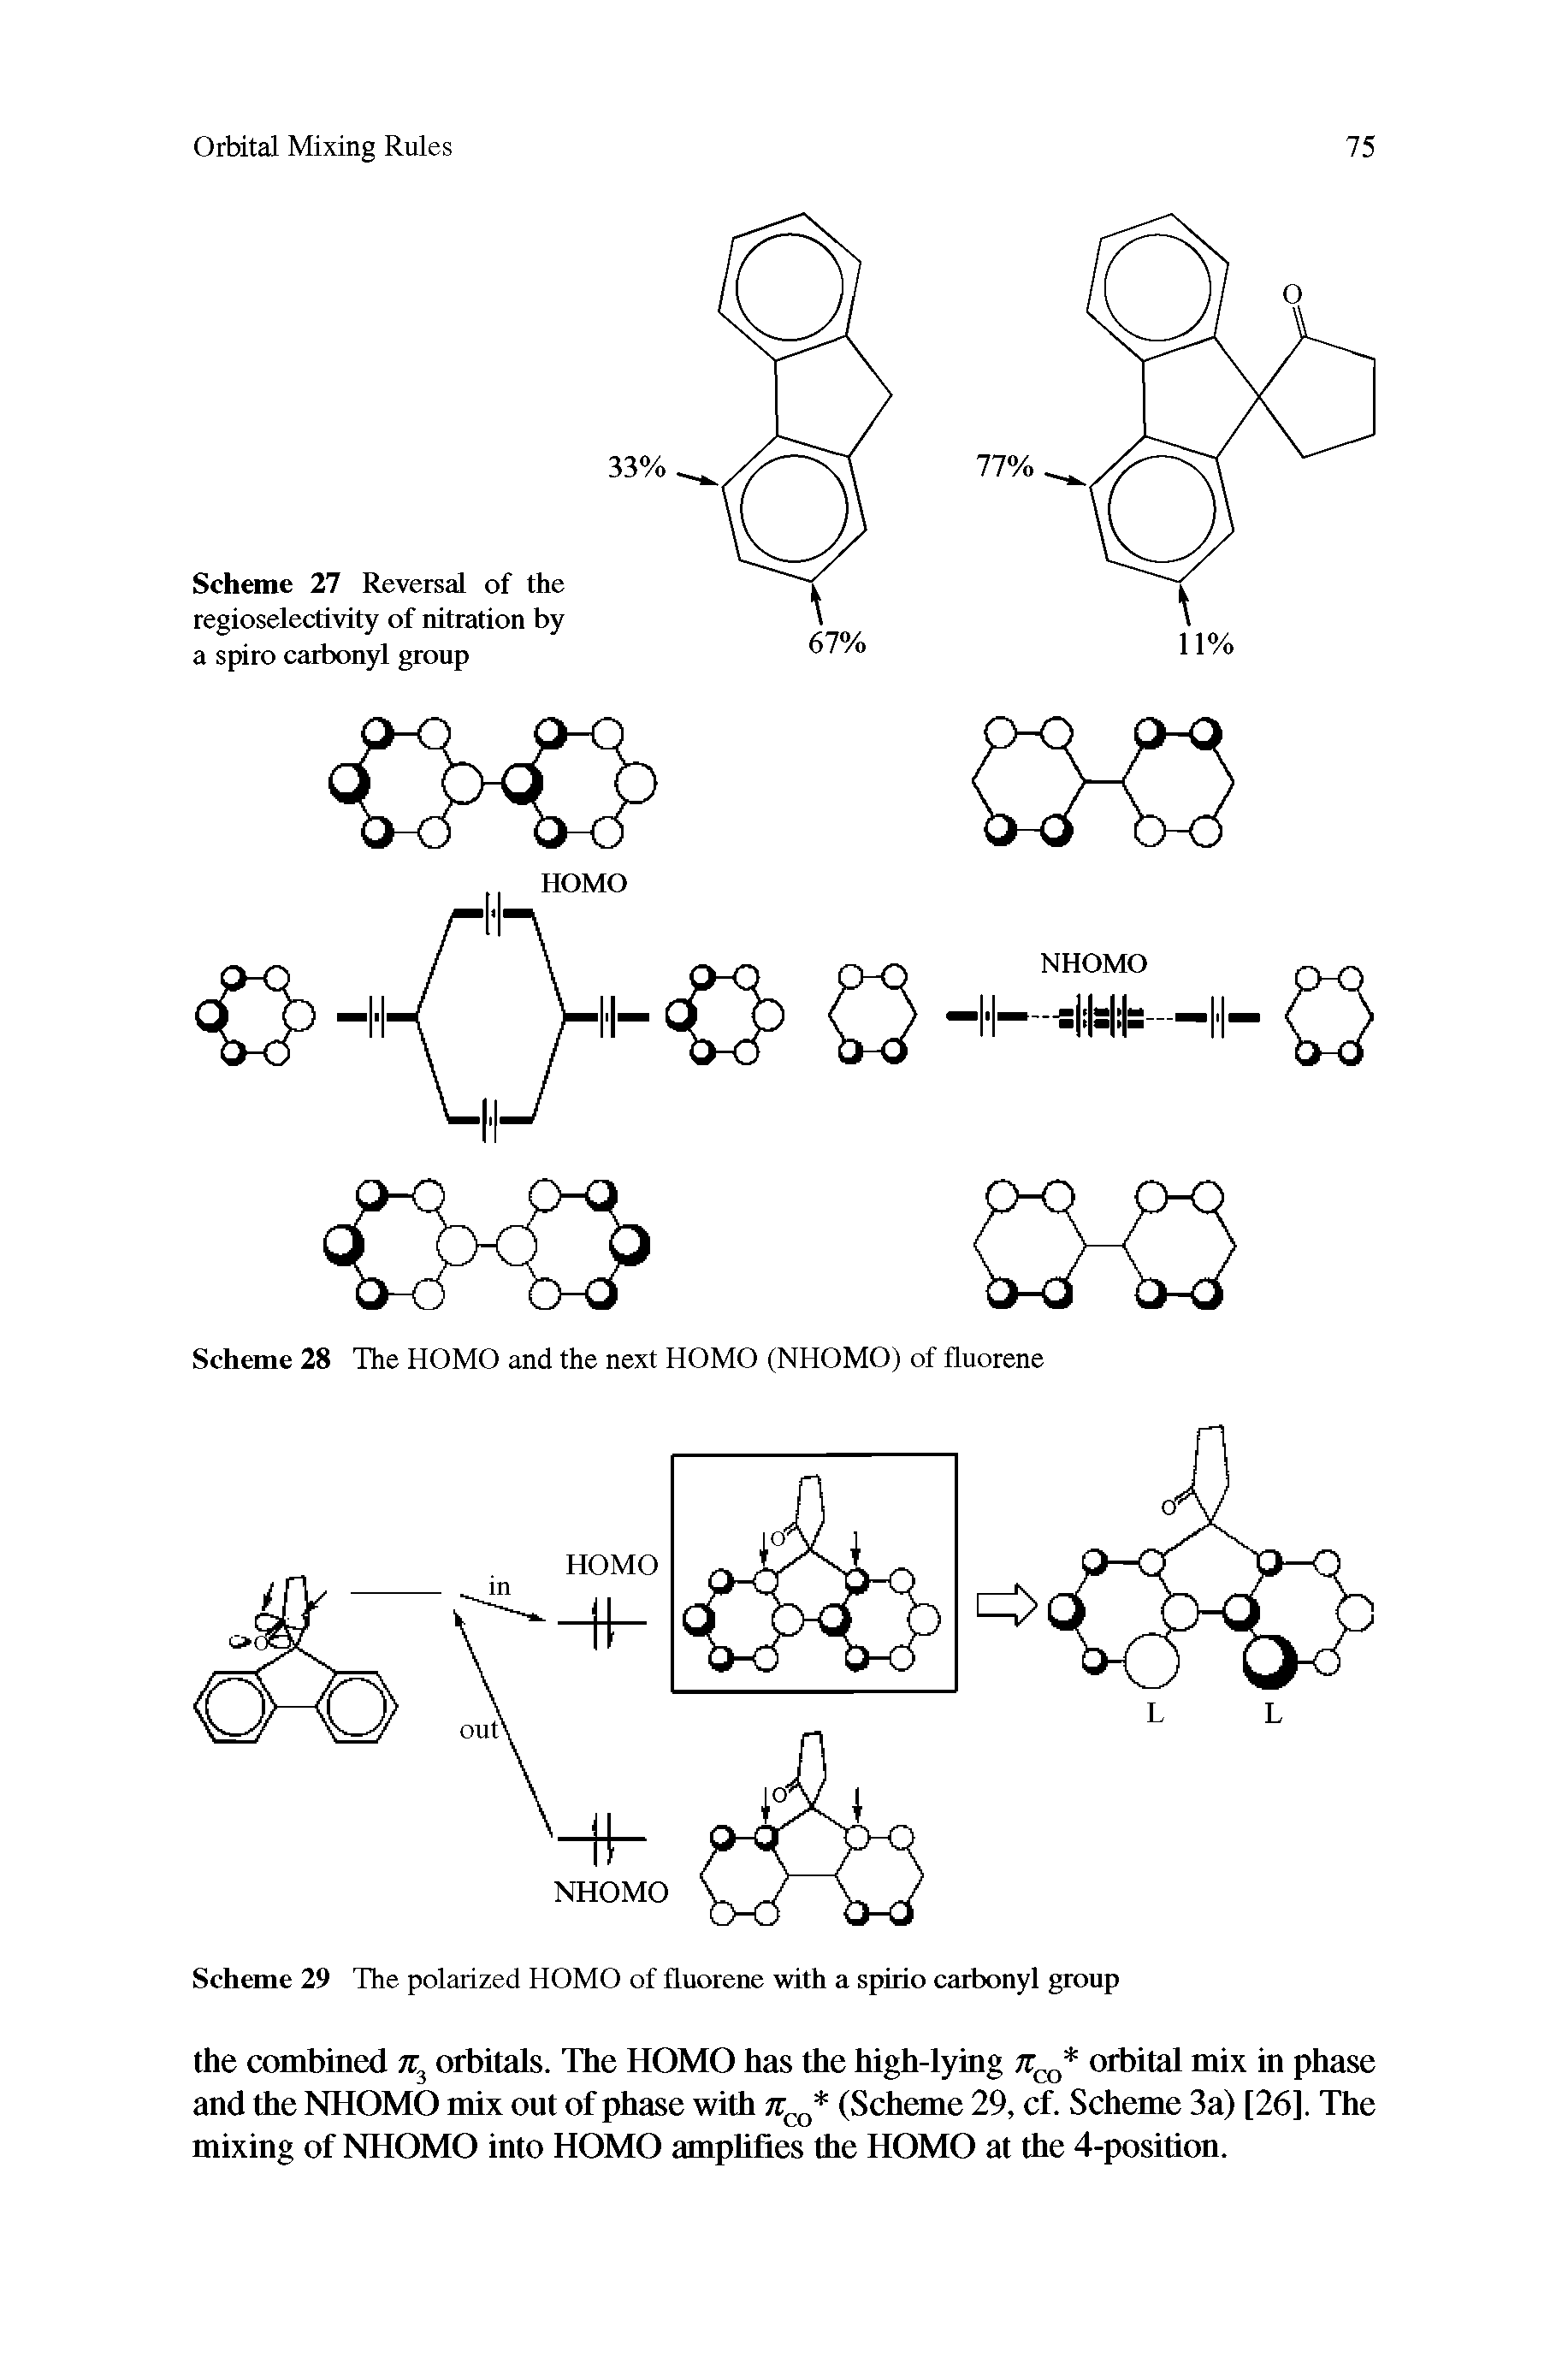 Scheme 29 The polarized HOMO of fluorene with a spirio carbonyl group...